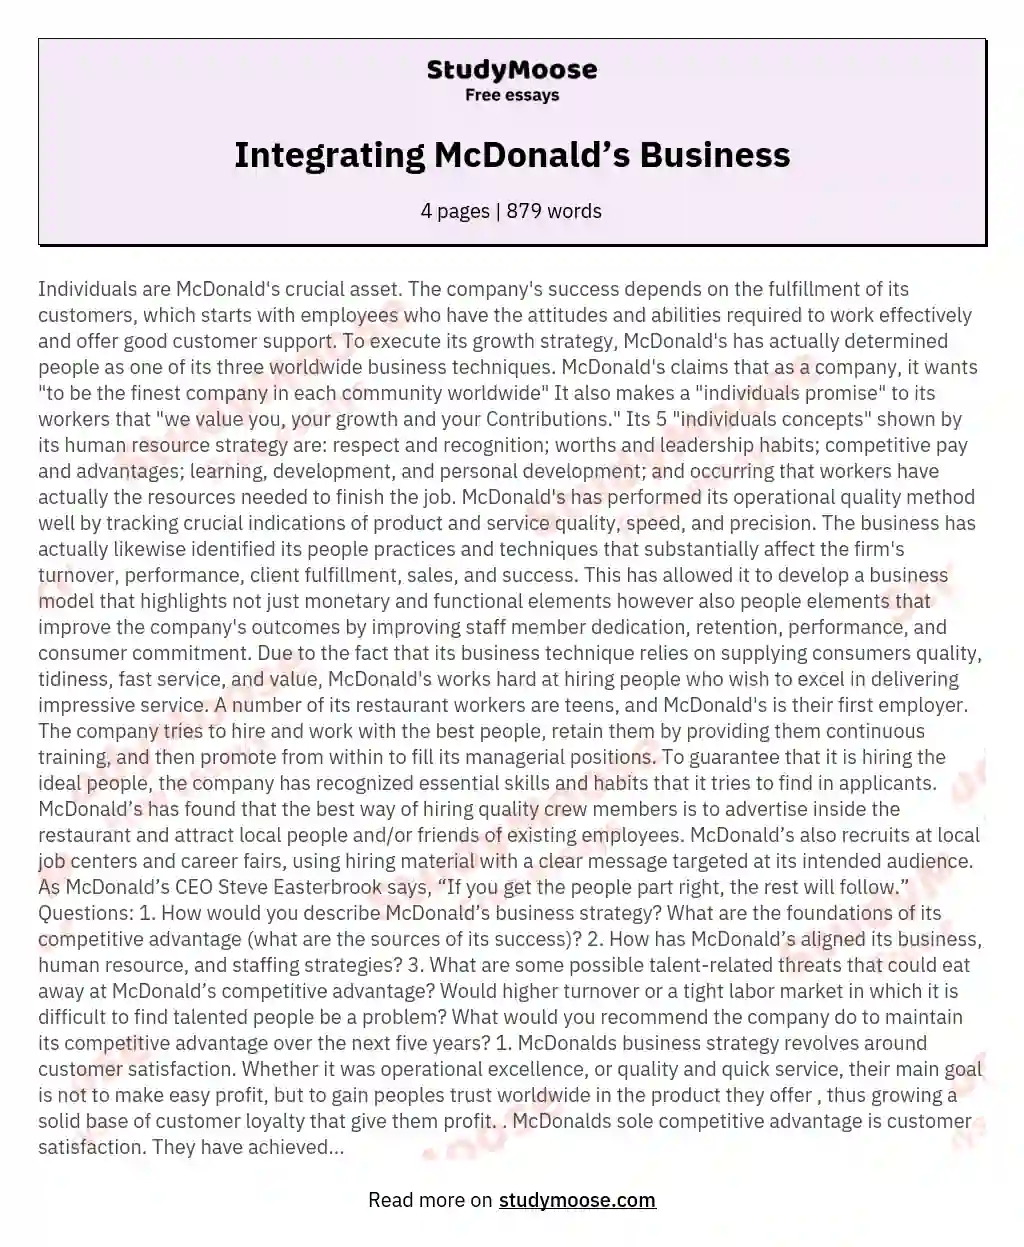 Integrating McDonald’s Business essay